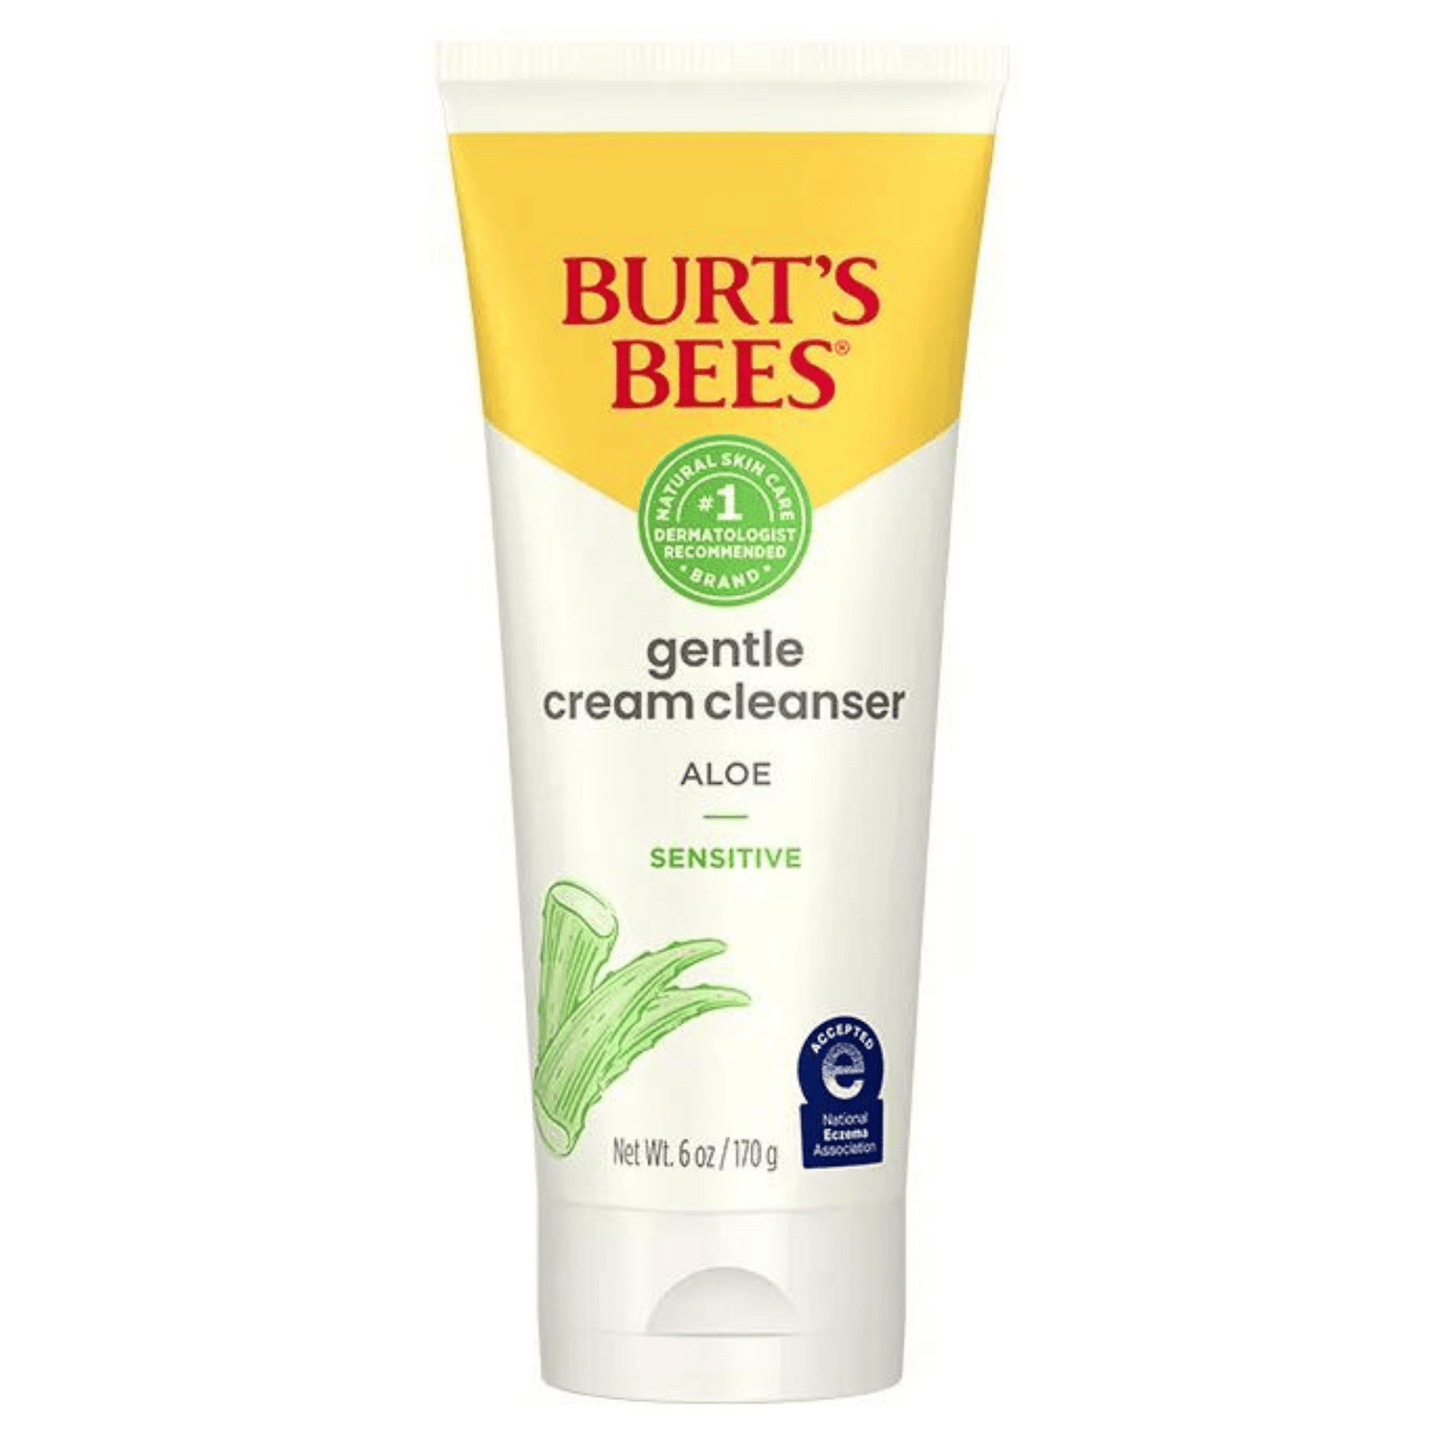 Primary Image of Gentle Cream Cleanser